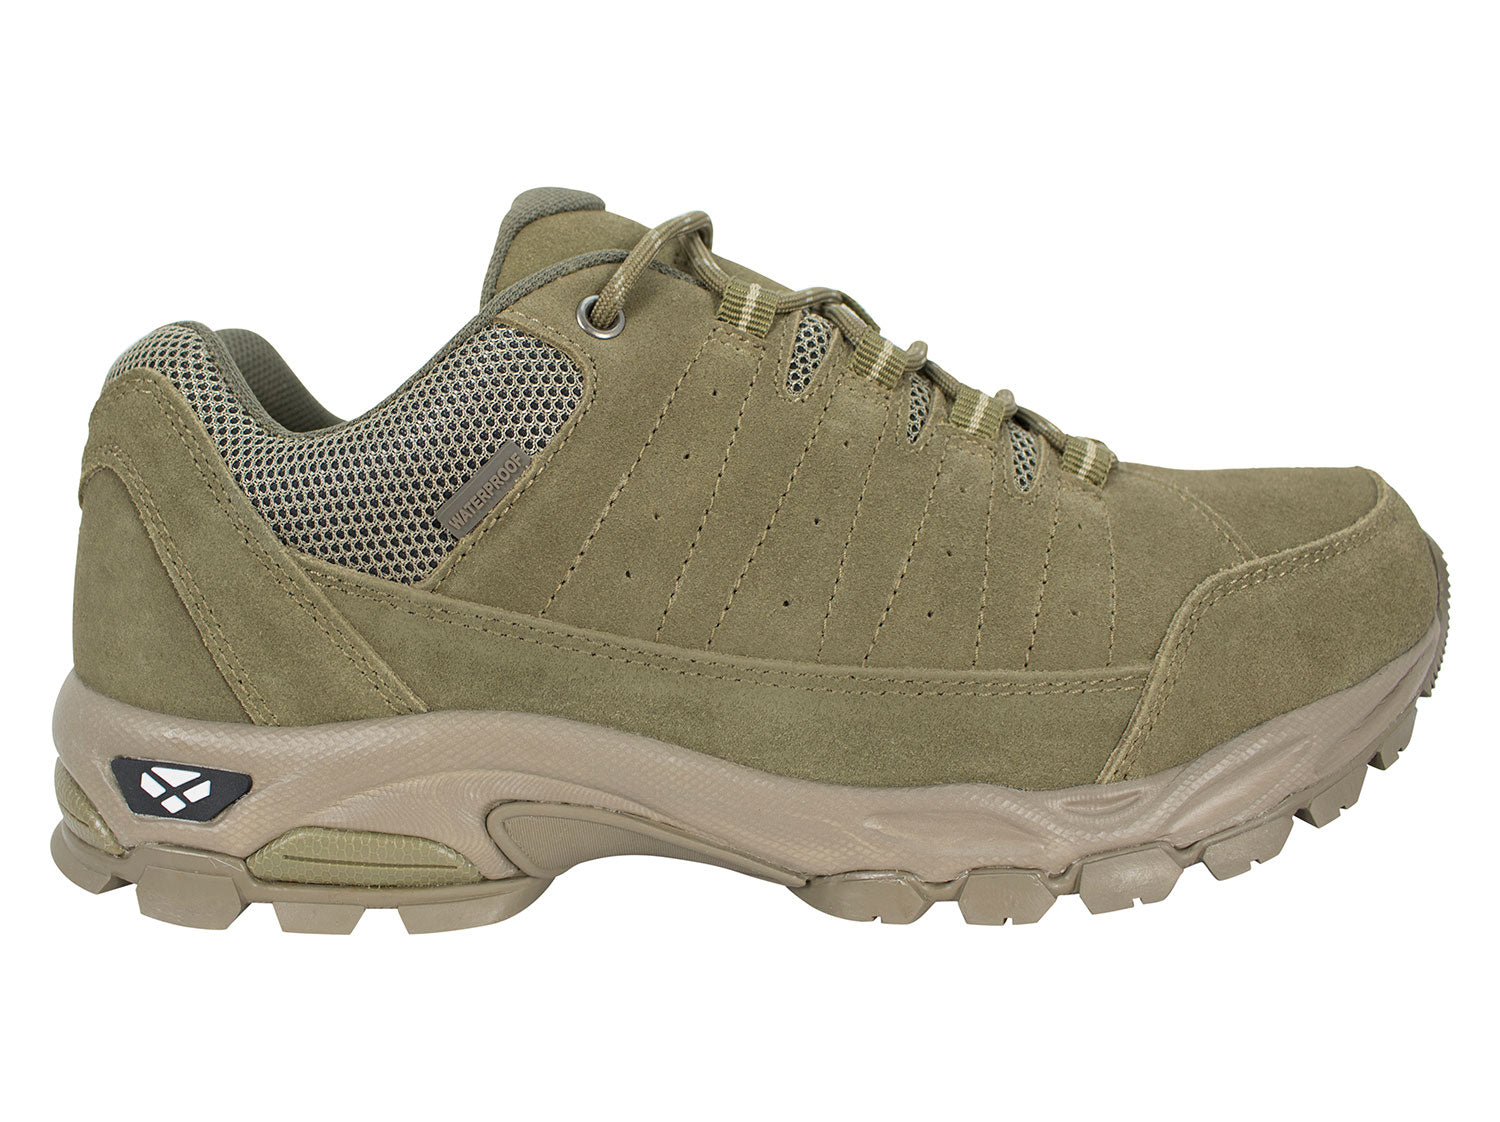 Brown Hoggs of Fife Cairn Pro Waterproof Hiking Shoes 